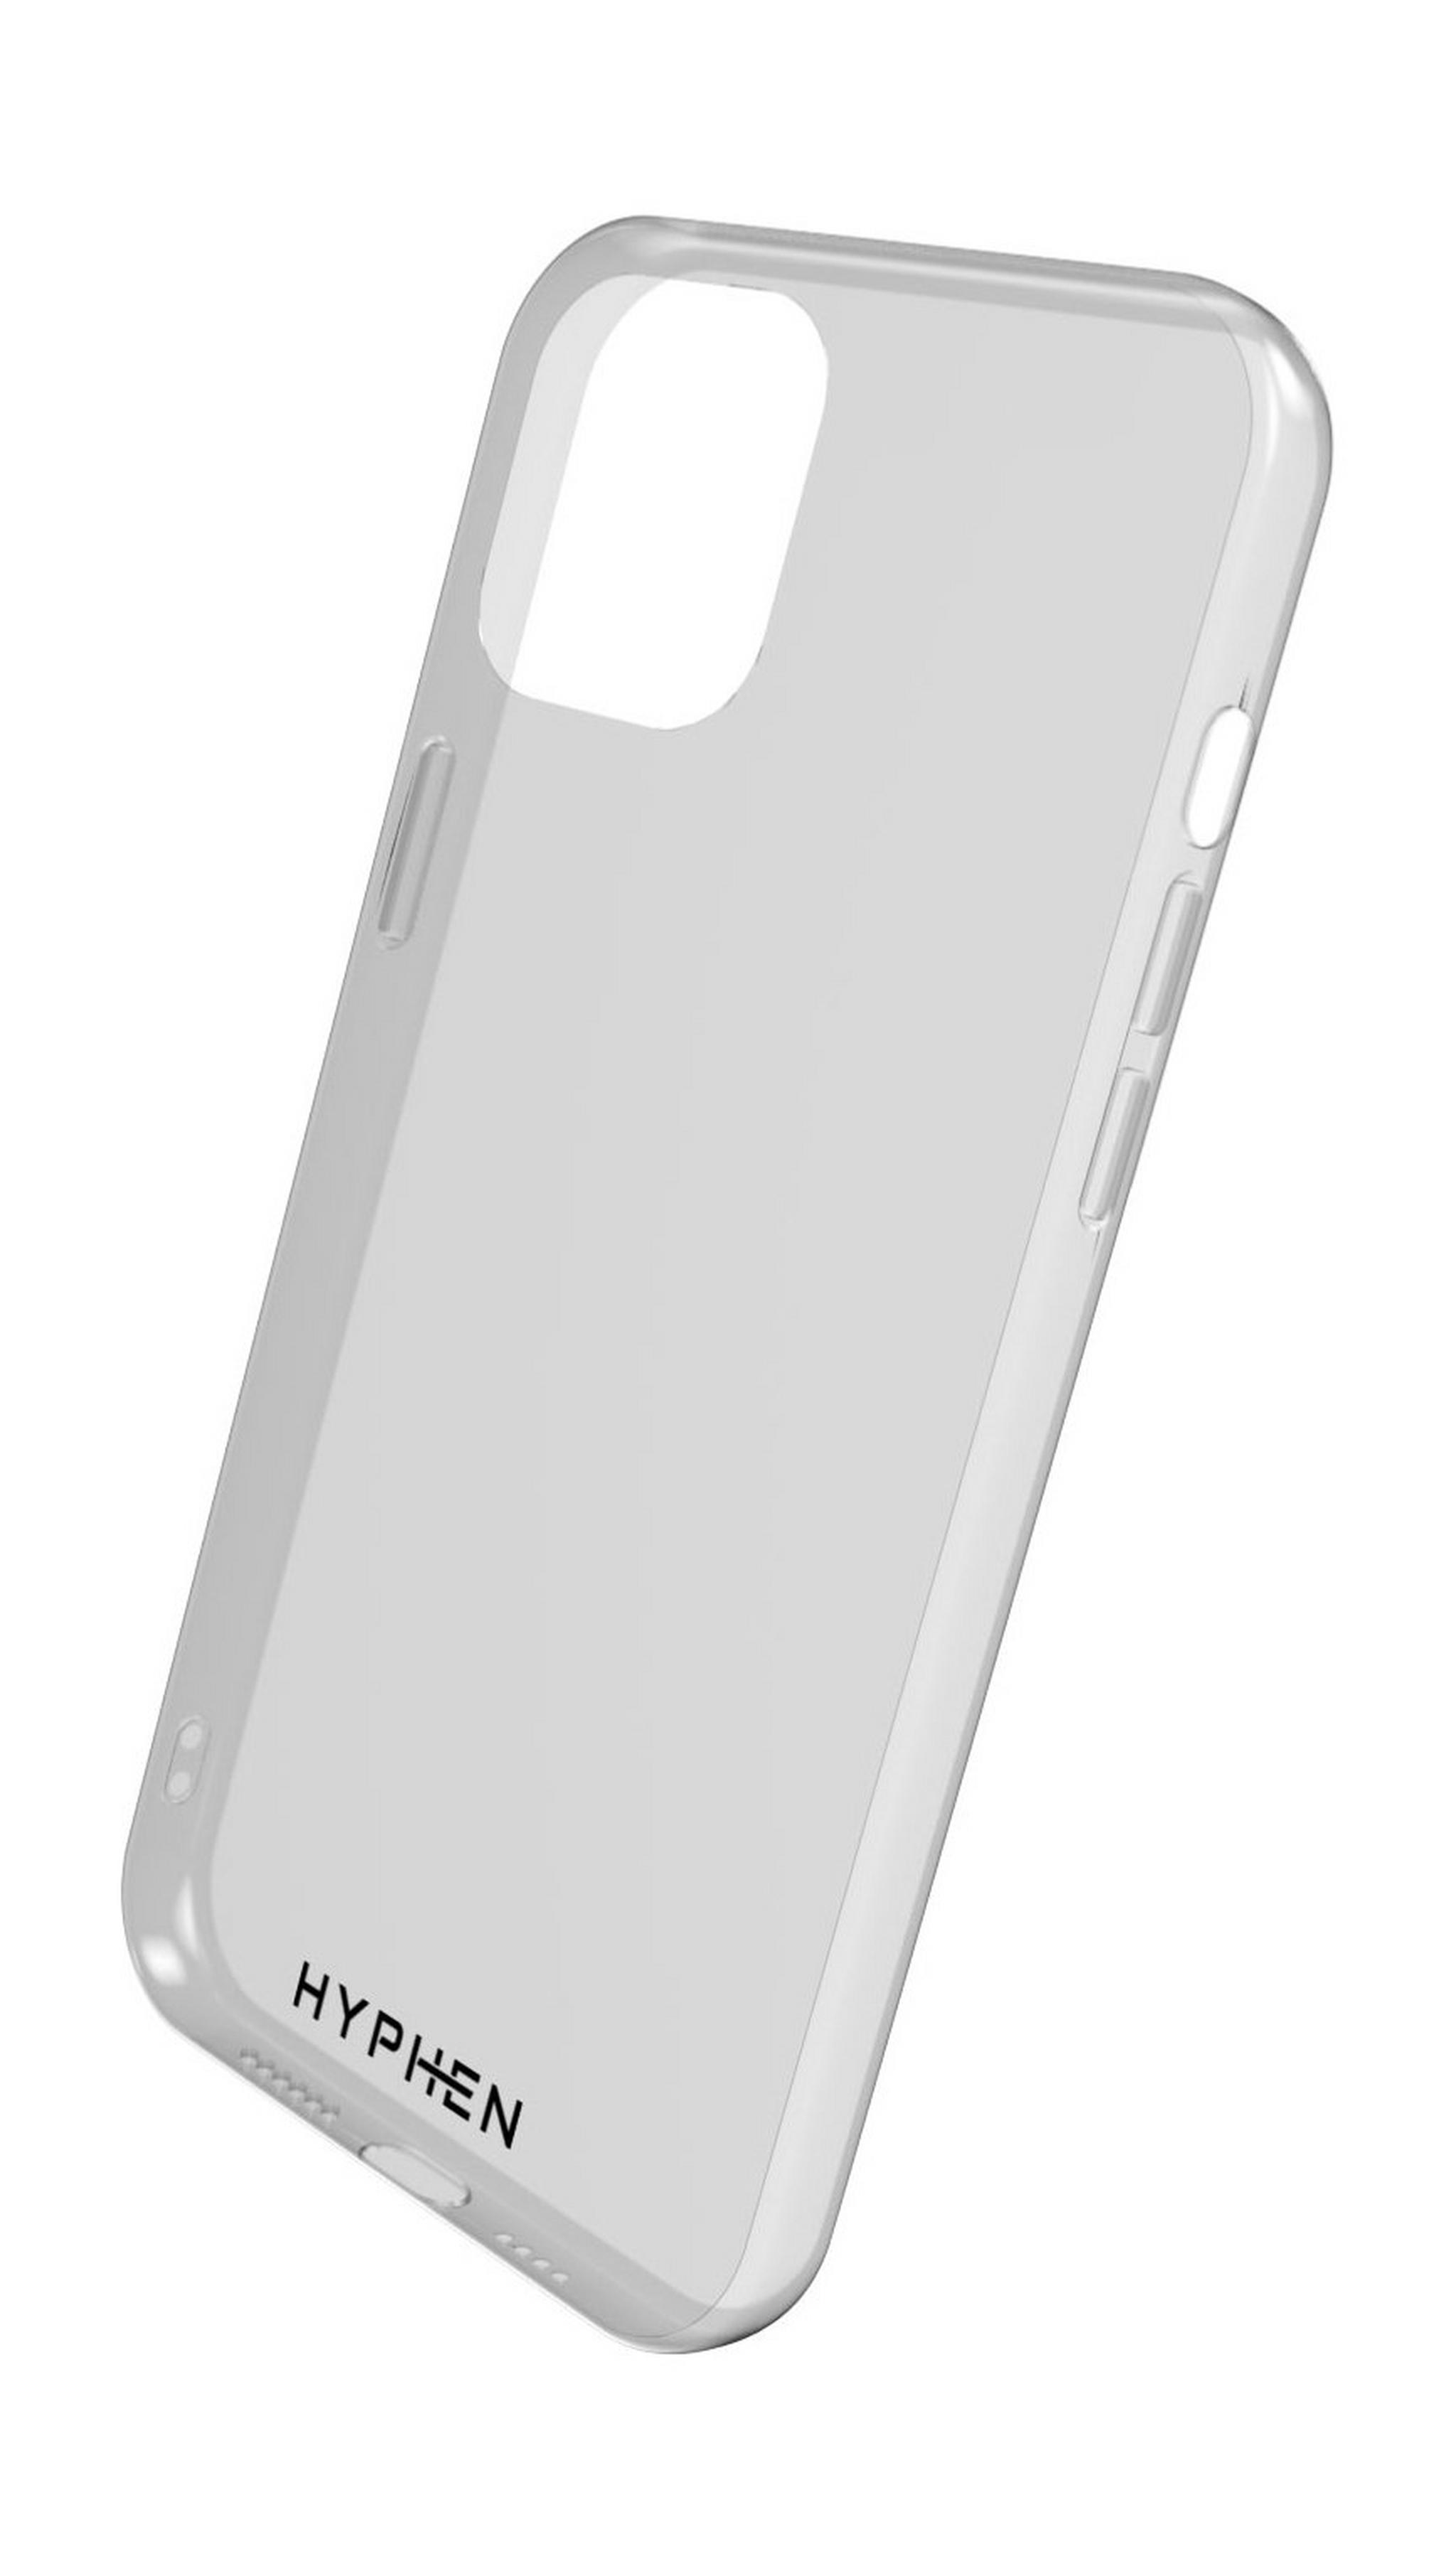 Hyphen iPhone 12 Pro Soft TPU Case - Clear